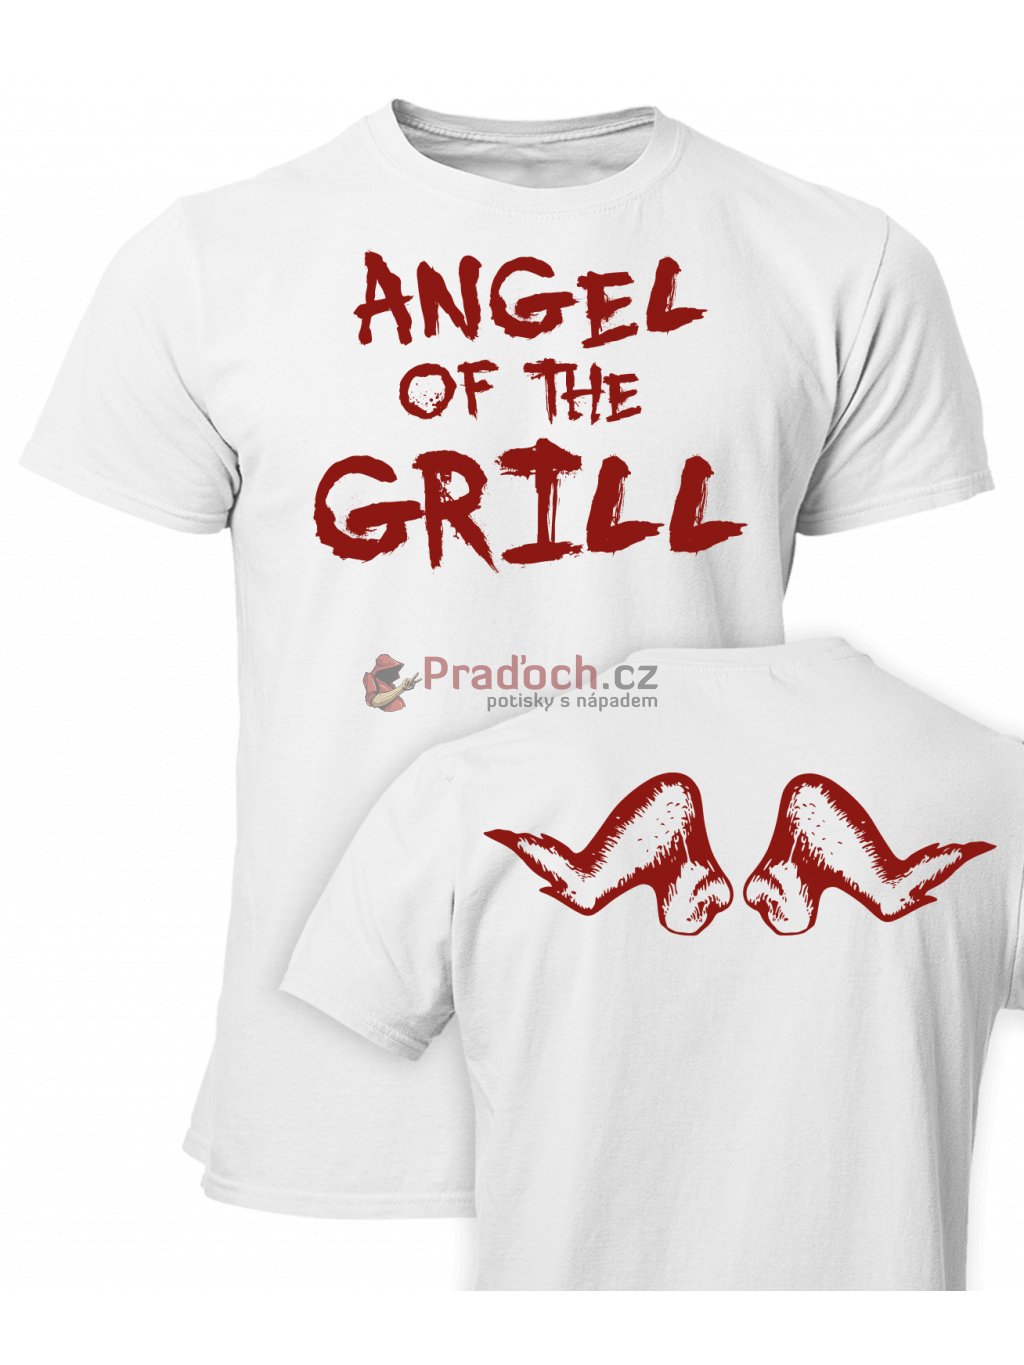 Tričko s potiskem Angel of the grill